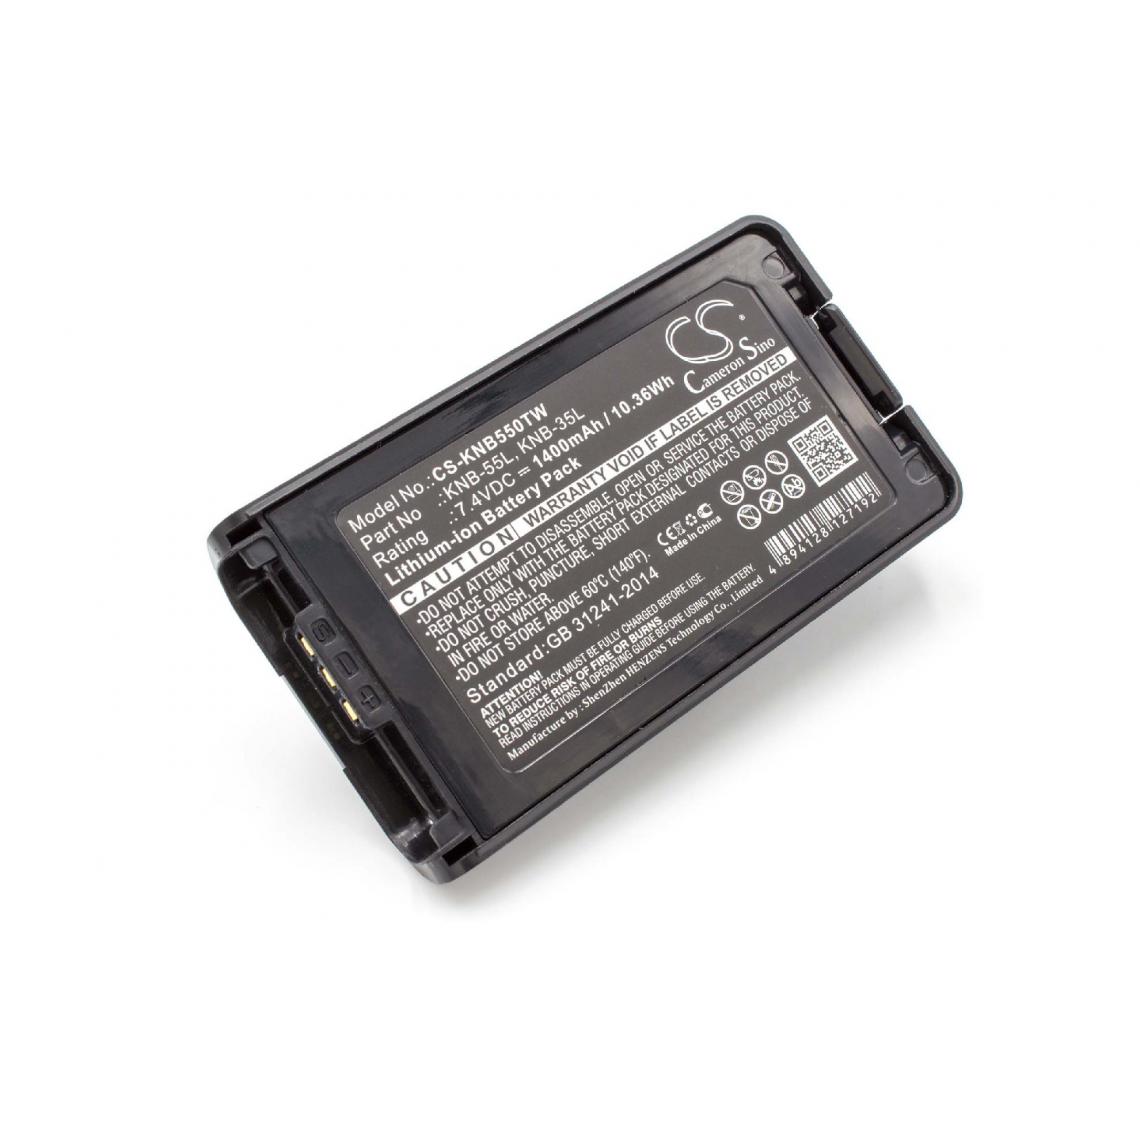 Vhbw - vhbw Batterie compatible avec Kenwood TK-3170E6, TK-3173, TK-3173K, TK-3178, TK-3360, TK-3360E radio talkie-walkie (1400mAh, 7,4V, Li-ion) - Autres accessoires smartphone